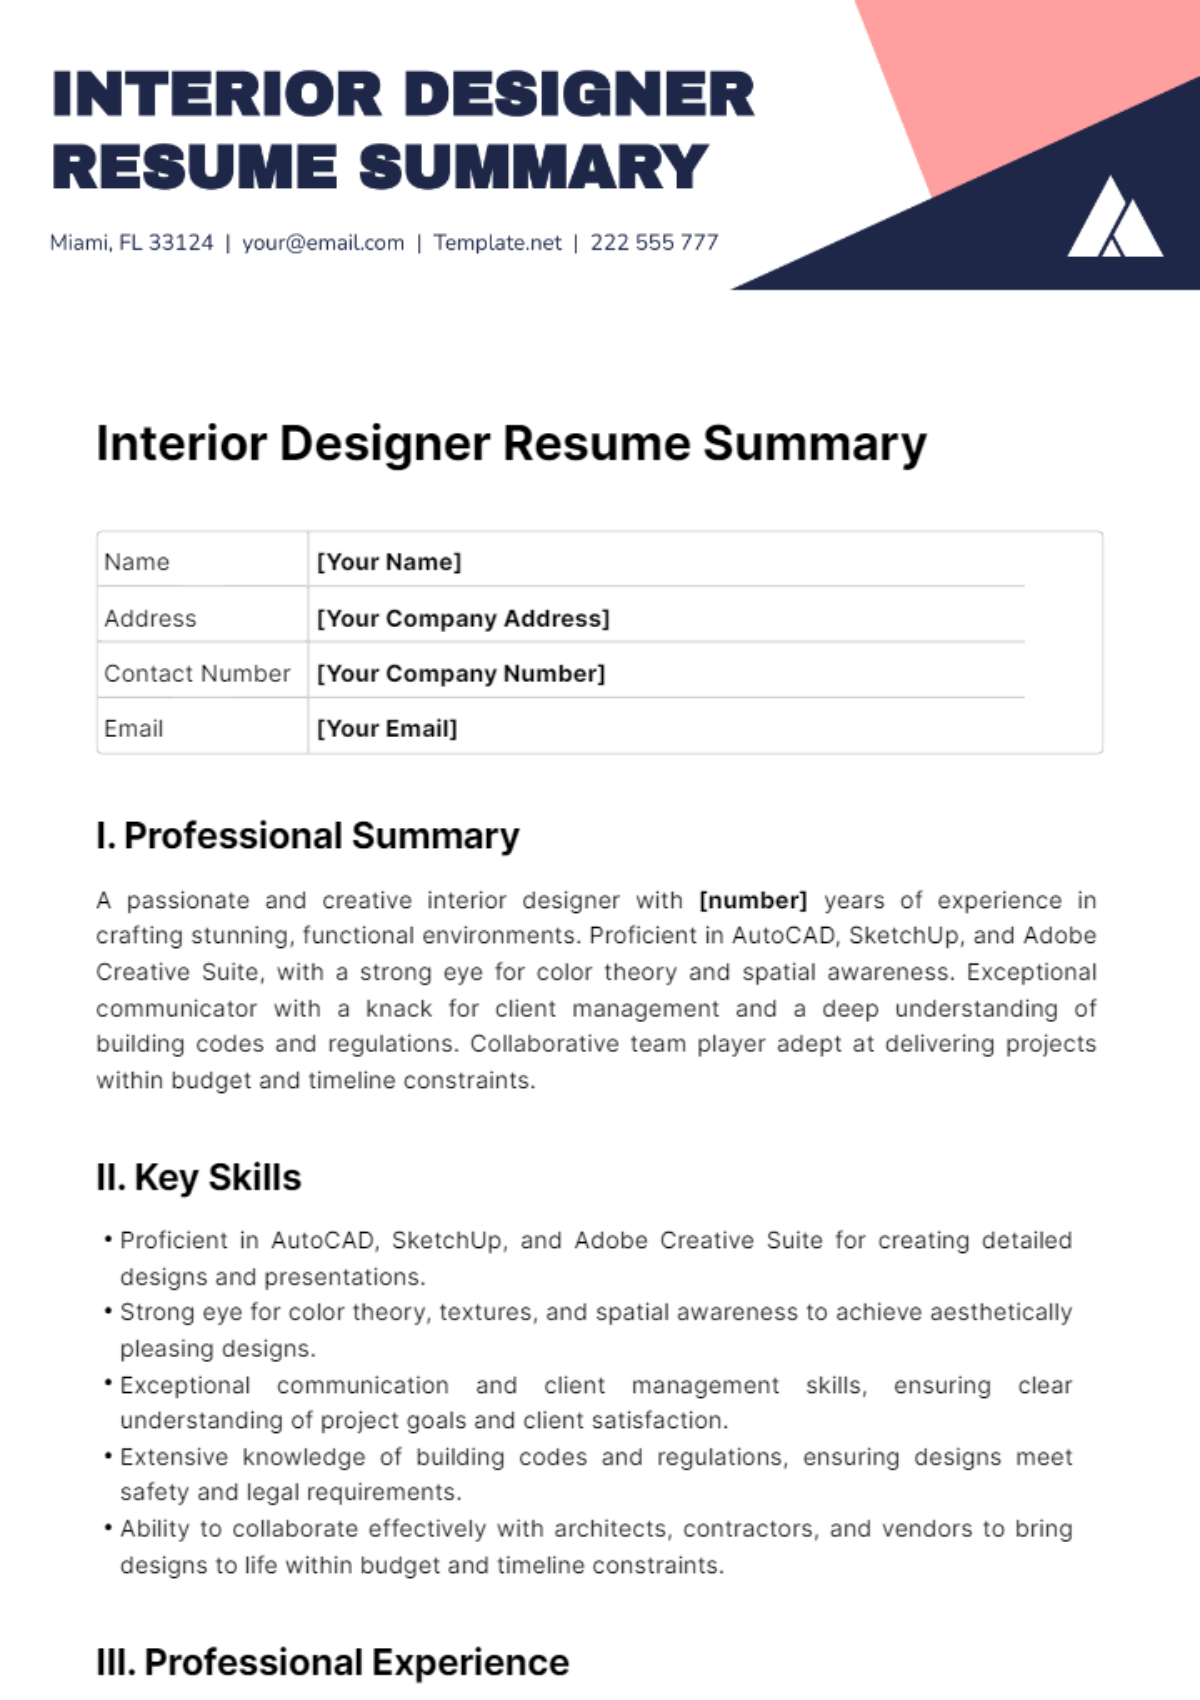 Free Interior Designer Resume Summary Template